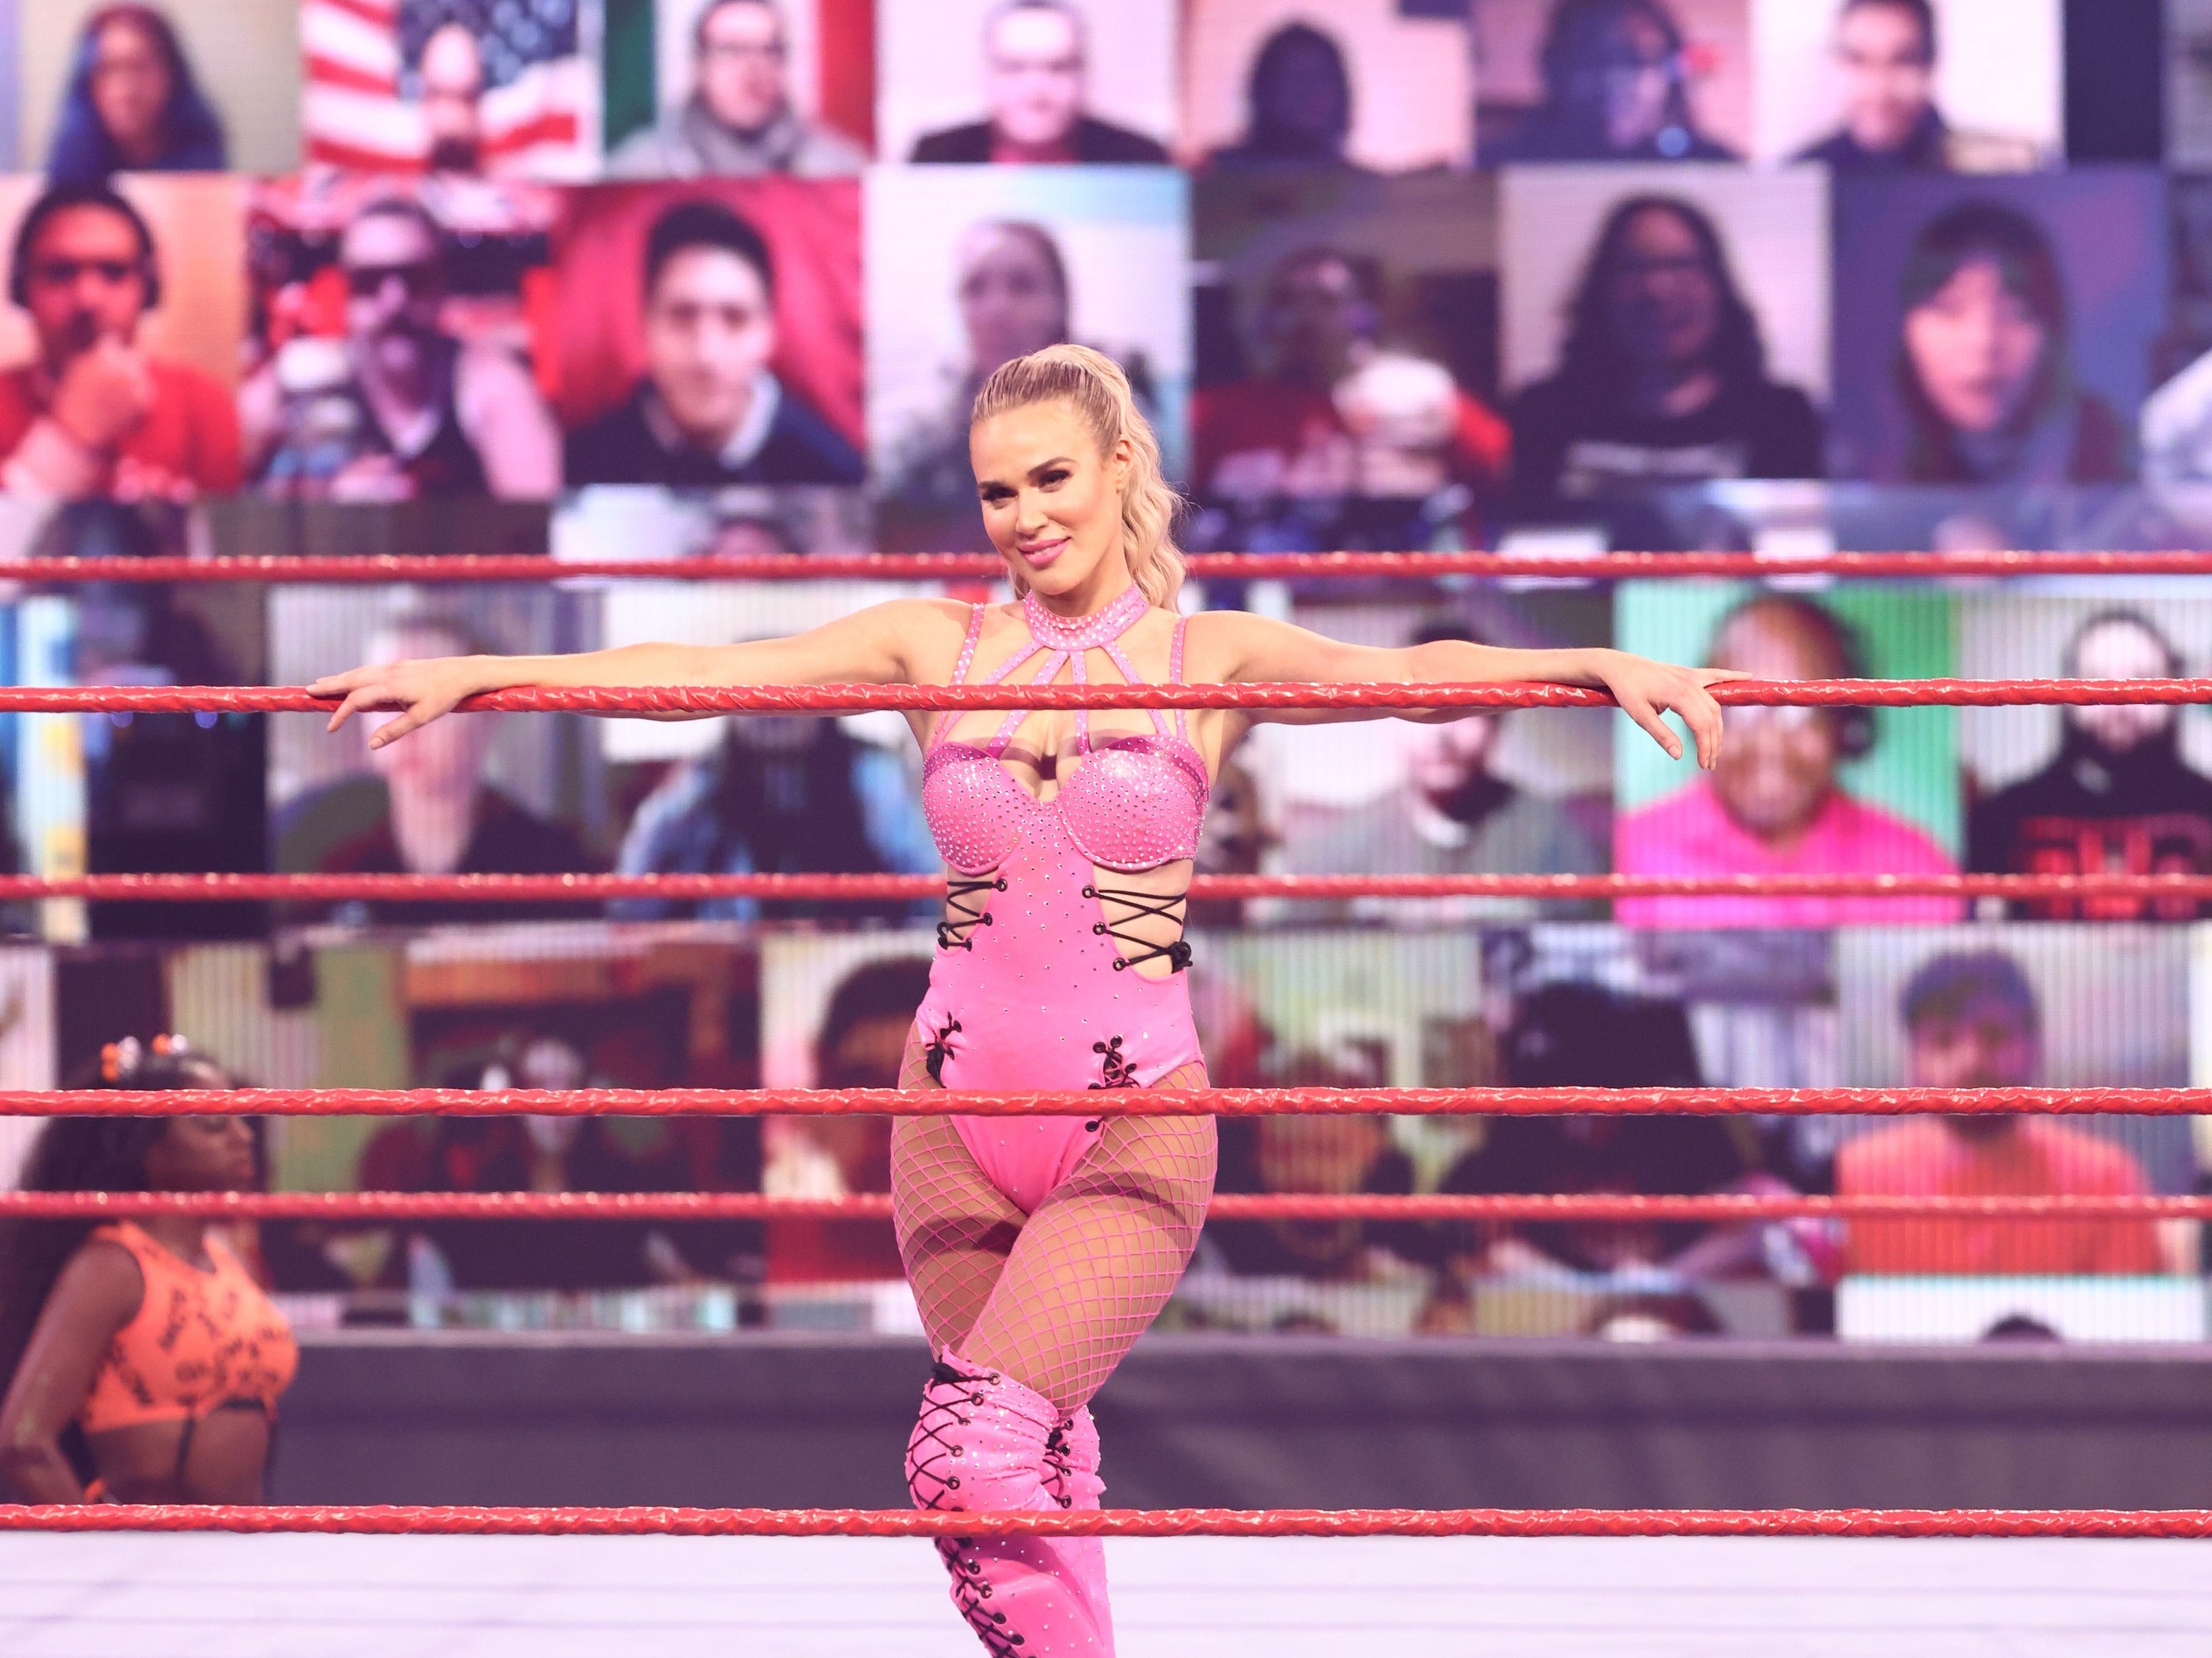 Lana has become a WWE superstar